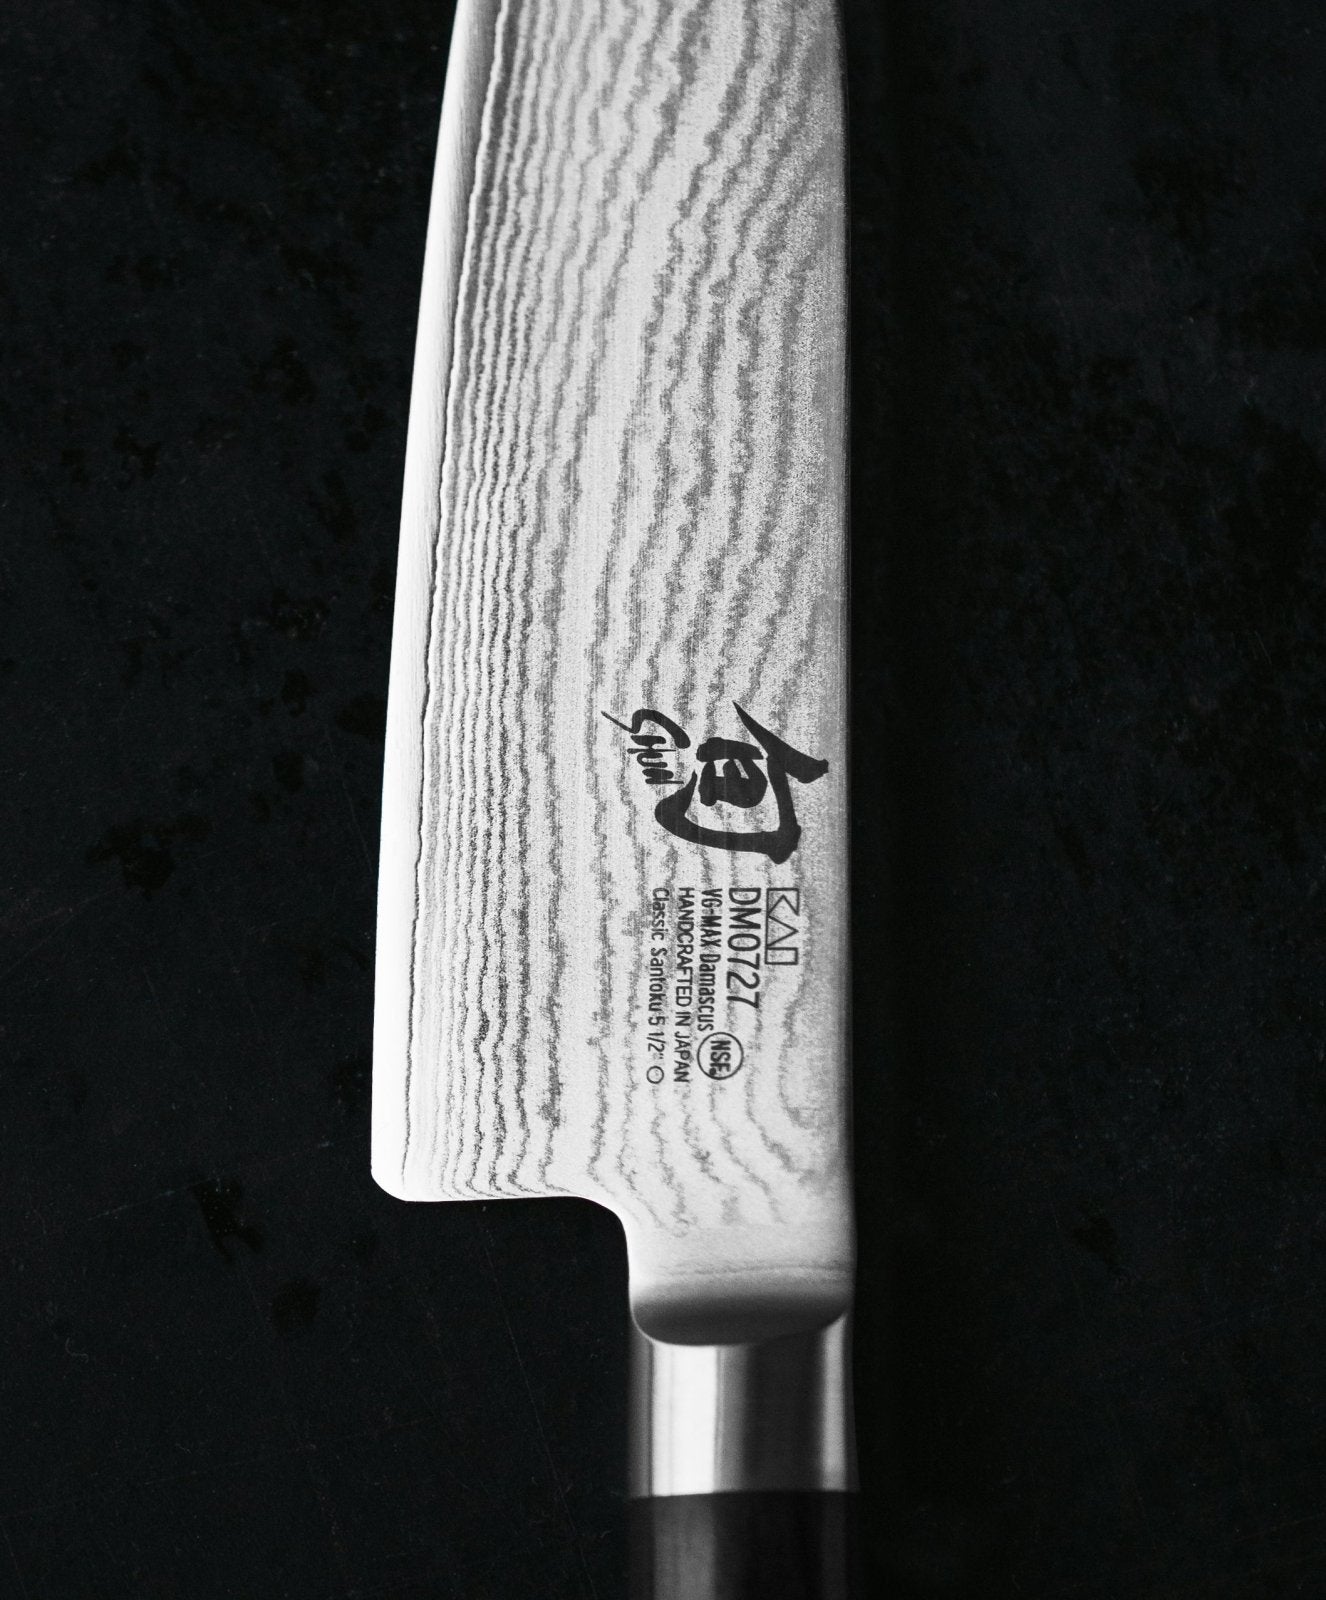 KAI Shun 18cm Chinese Chefs Knife - KAI-DM-0712 - The Cotswold Knife Company